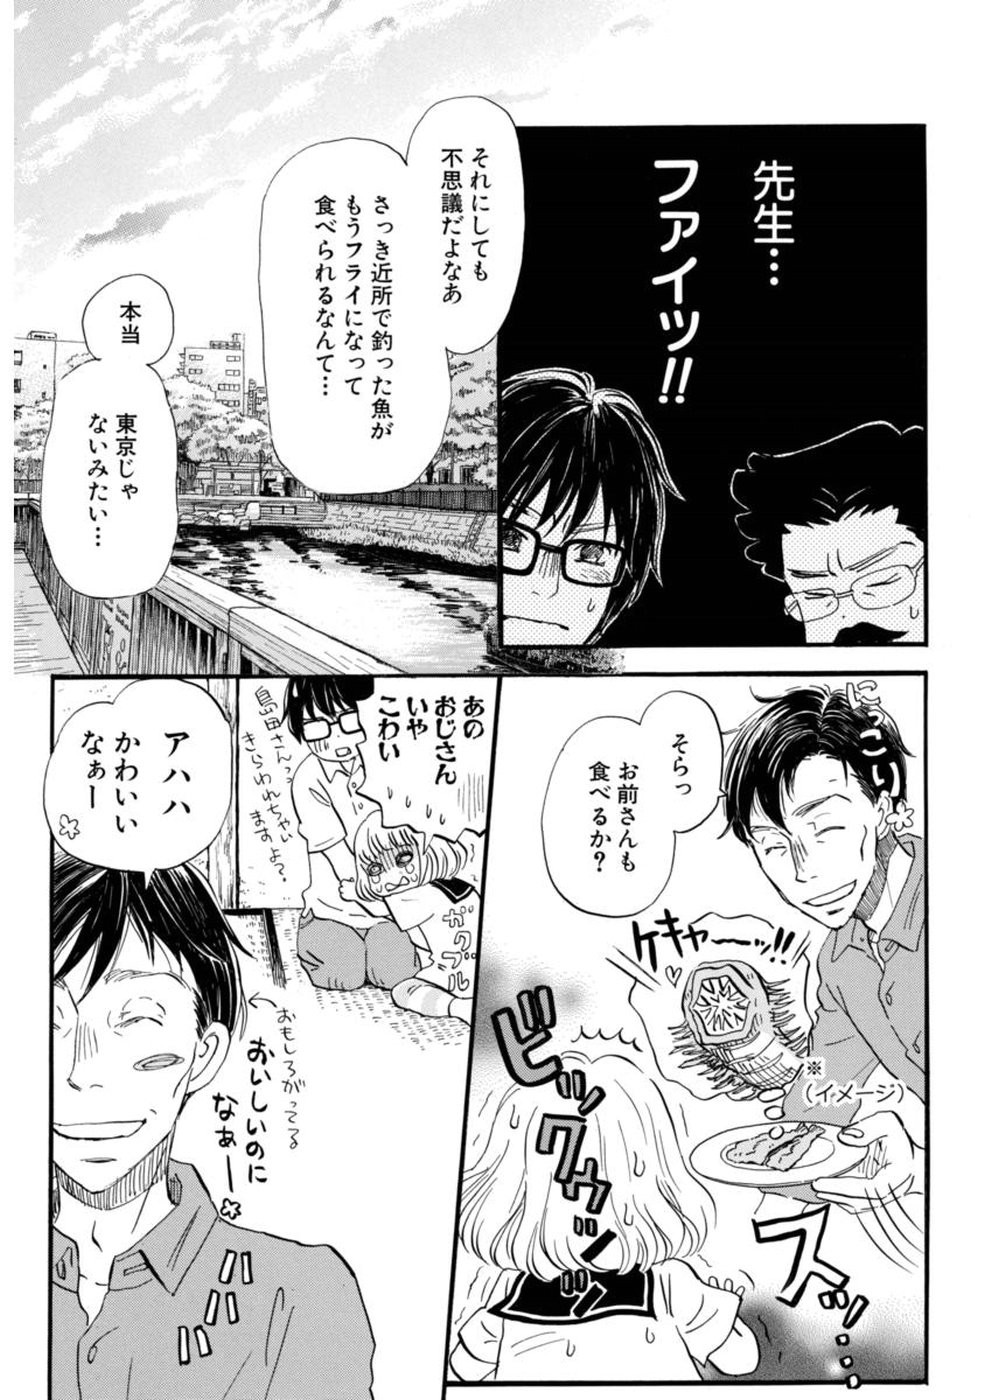 3 Gatsu no Lion - Chapter 146 - Page 9